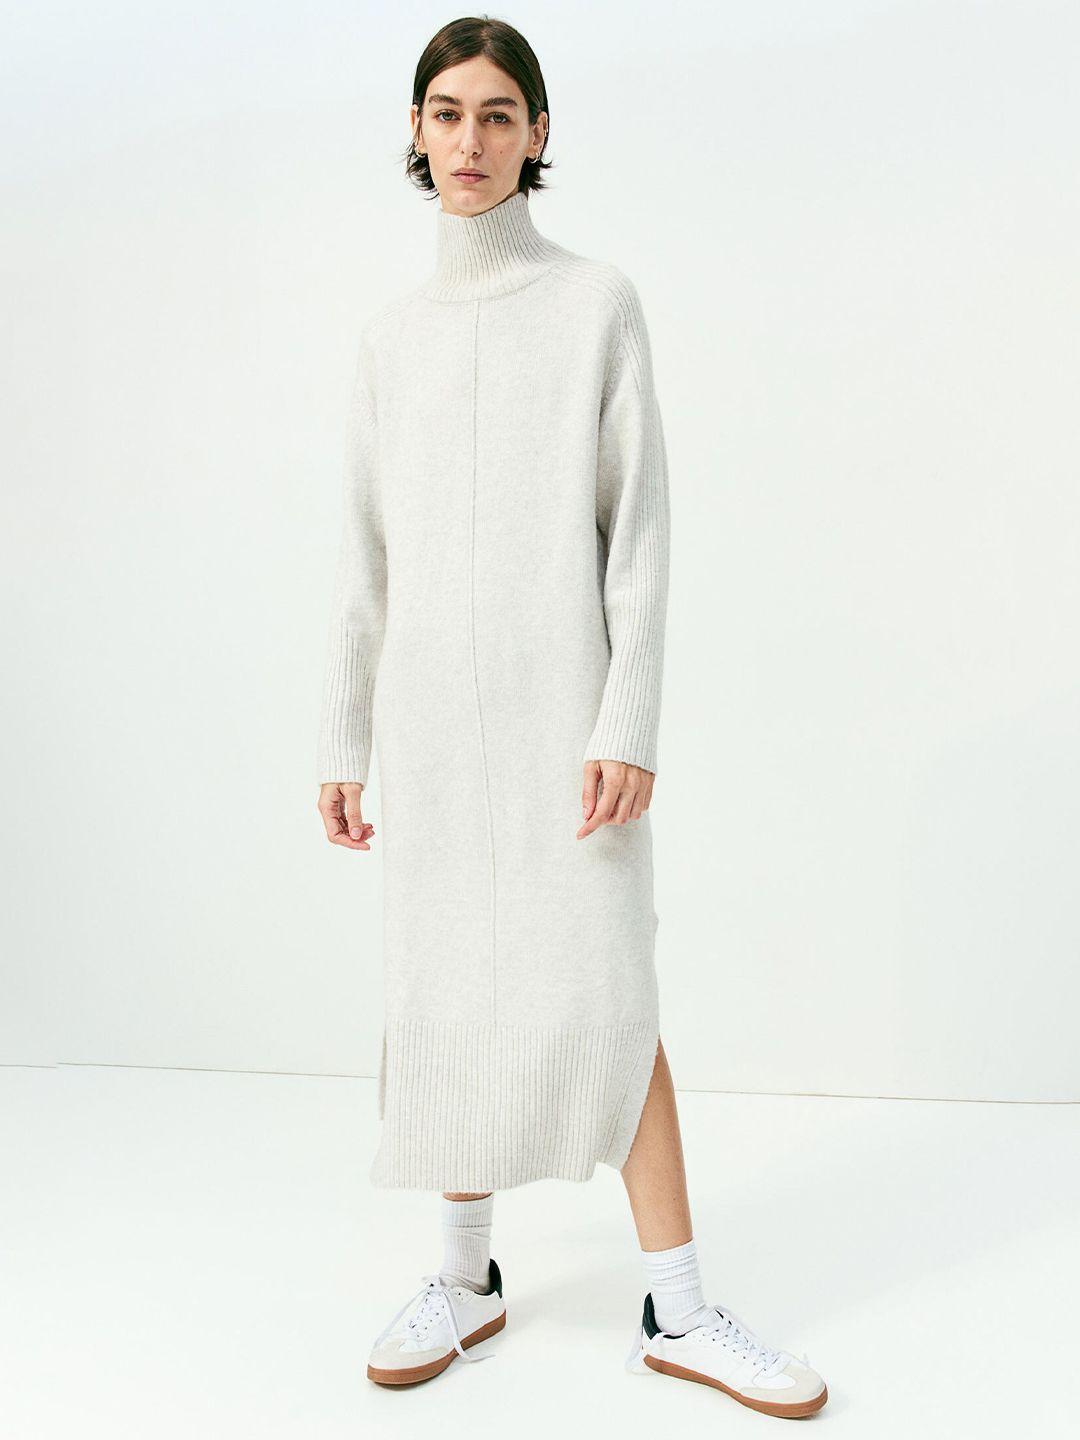 h&m knitted turtleneck dress